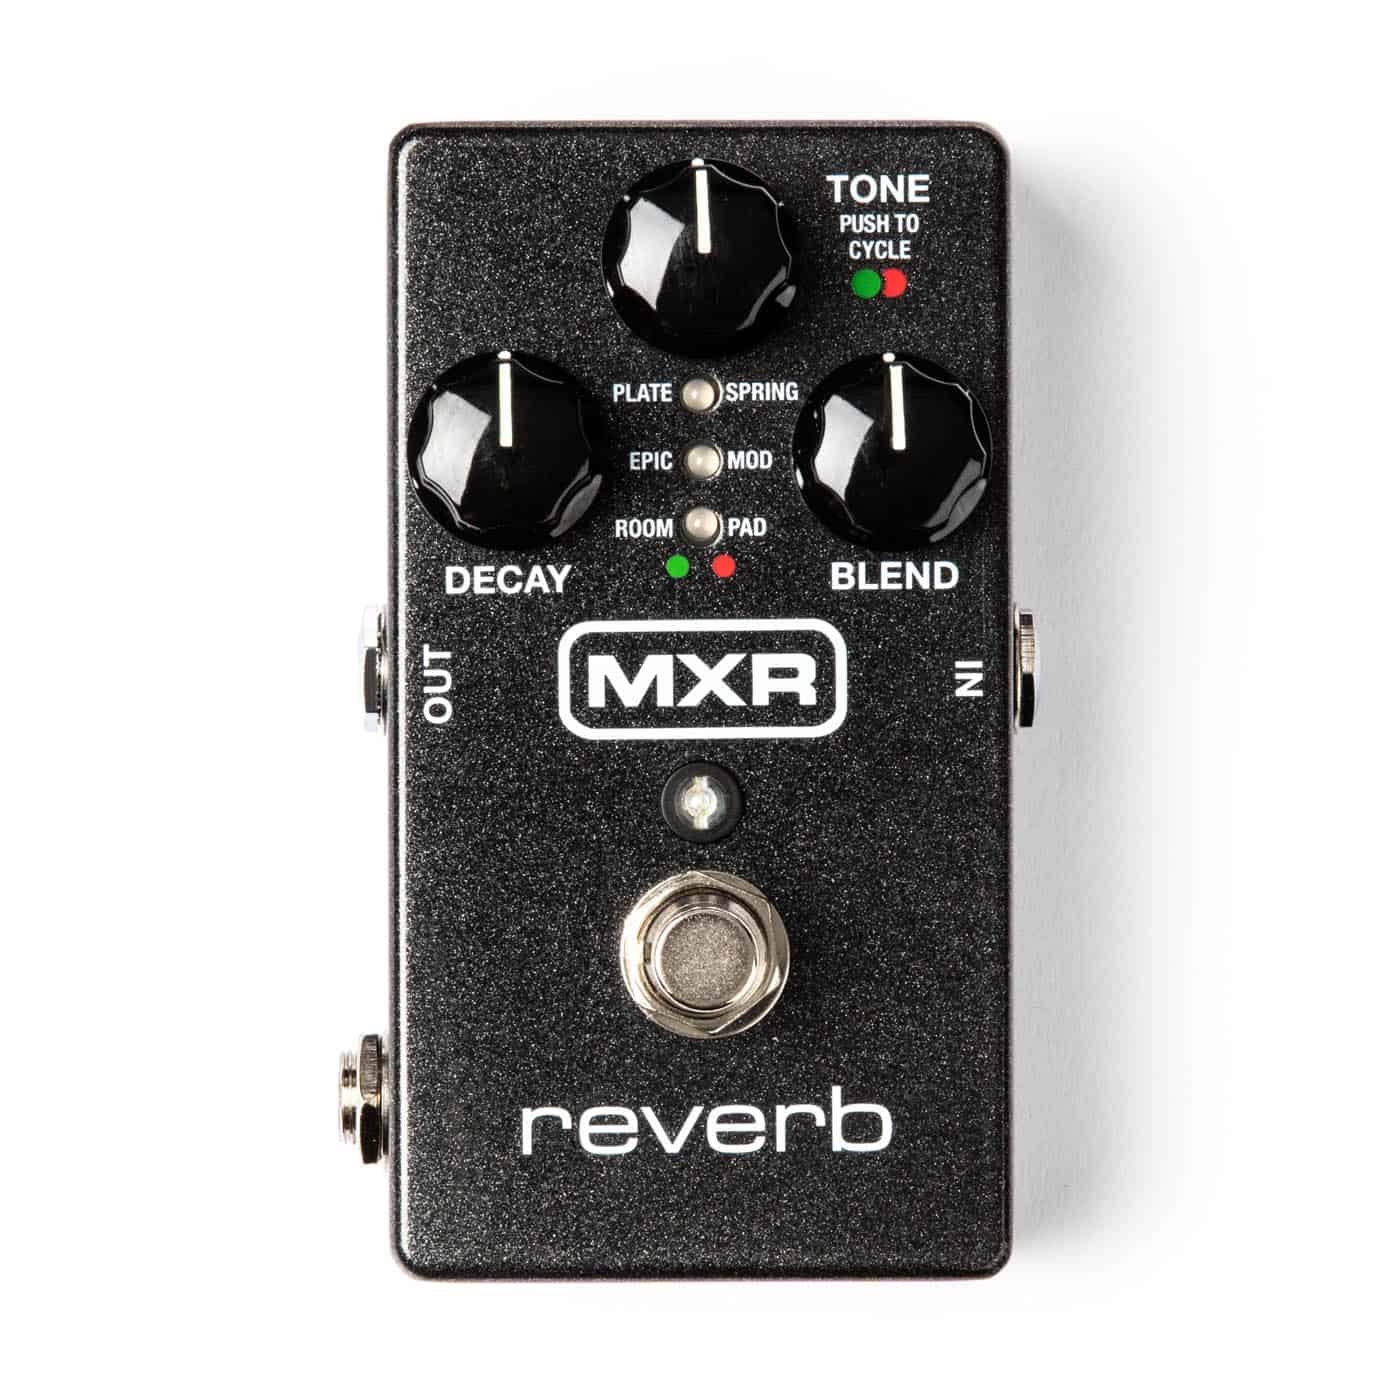 Picture of a MXR M300 Reverb guitar pedal